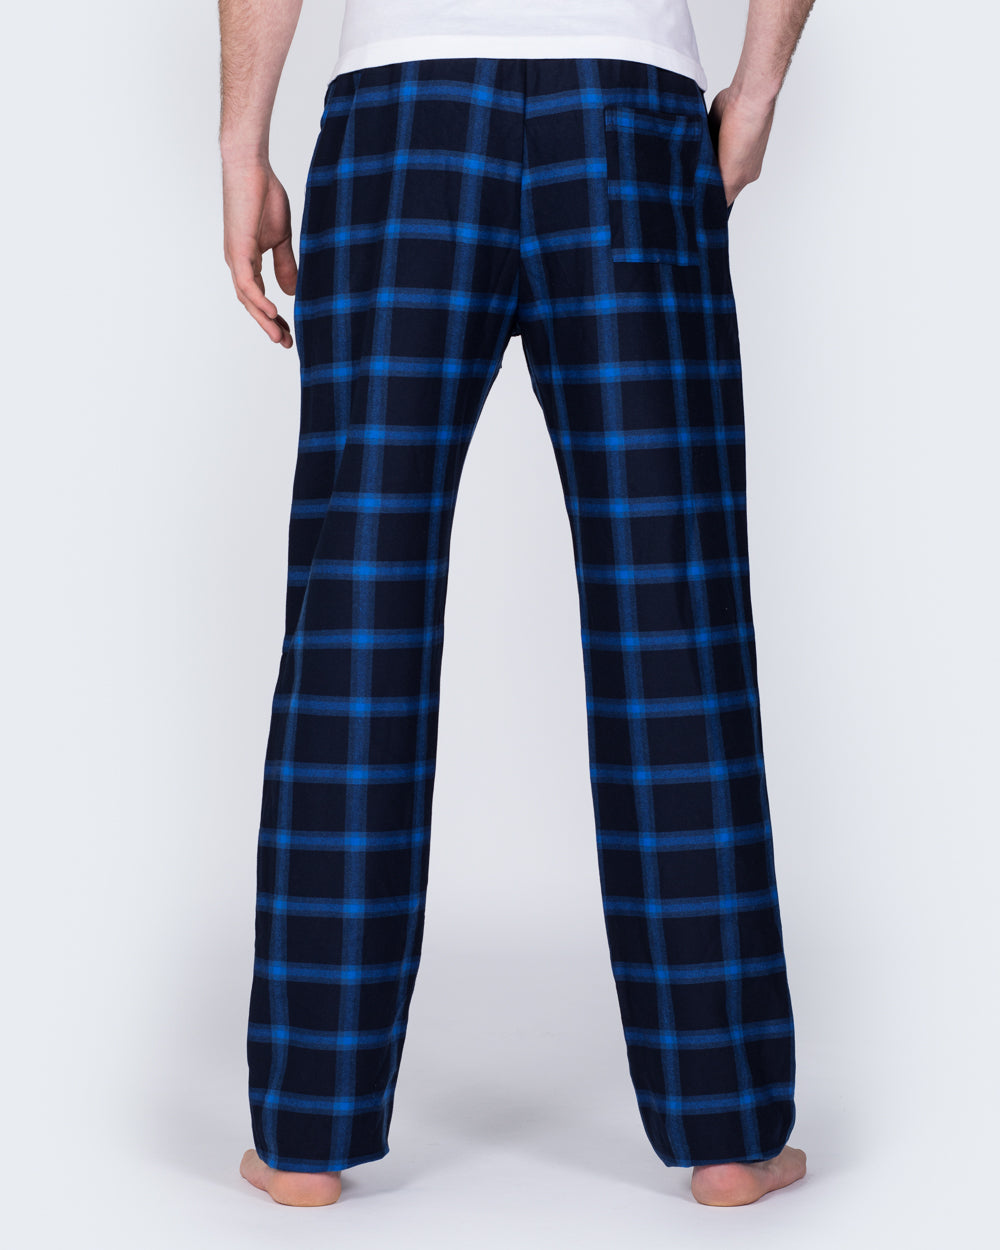 2t Tall Regular Fit Pyjama Bottoms (navy/blue)